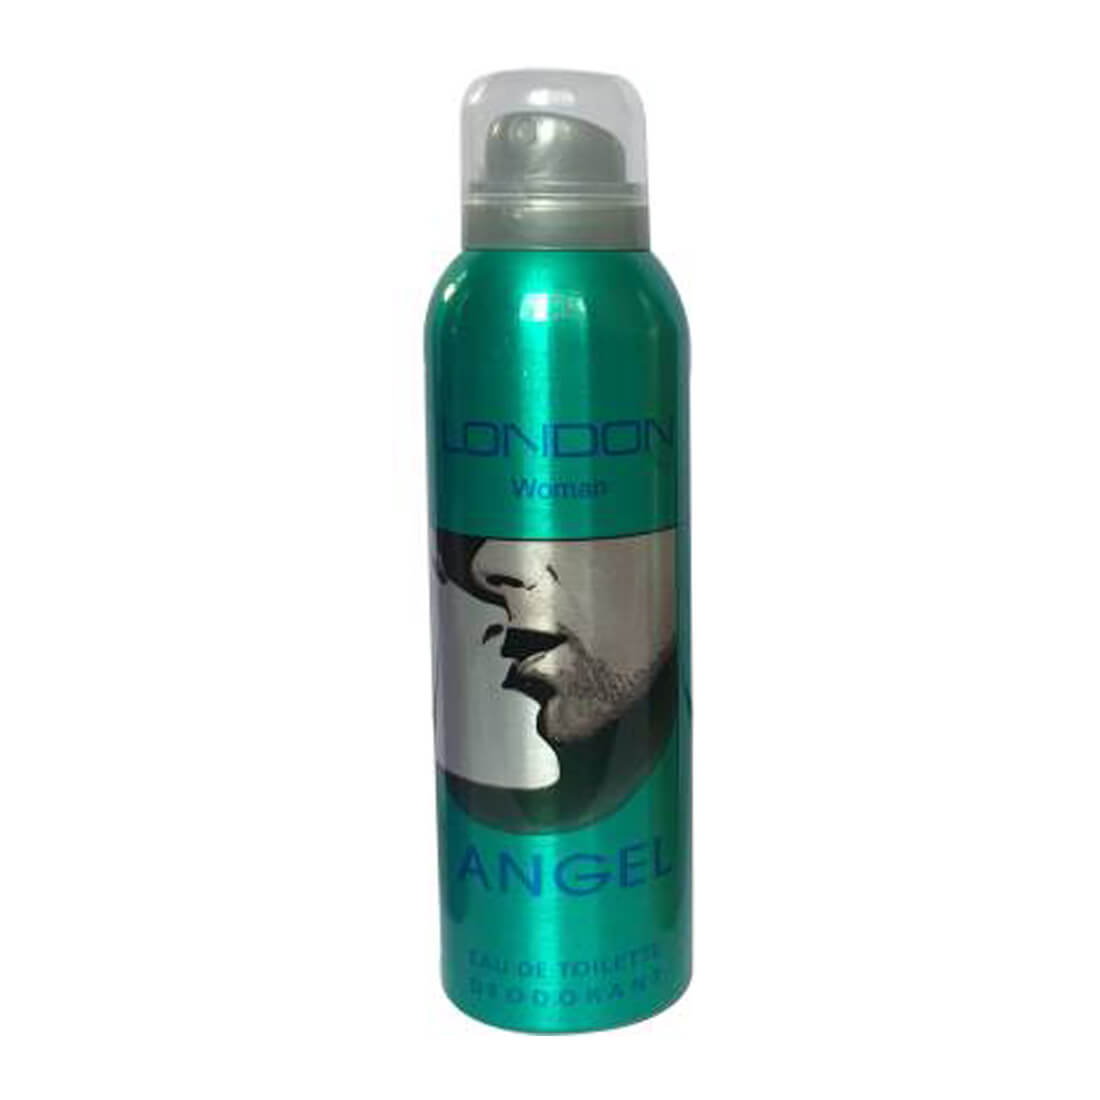 London Angel Deodorant Body Spray Pack of 2 x 200ml